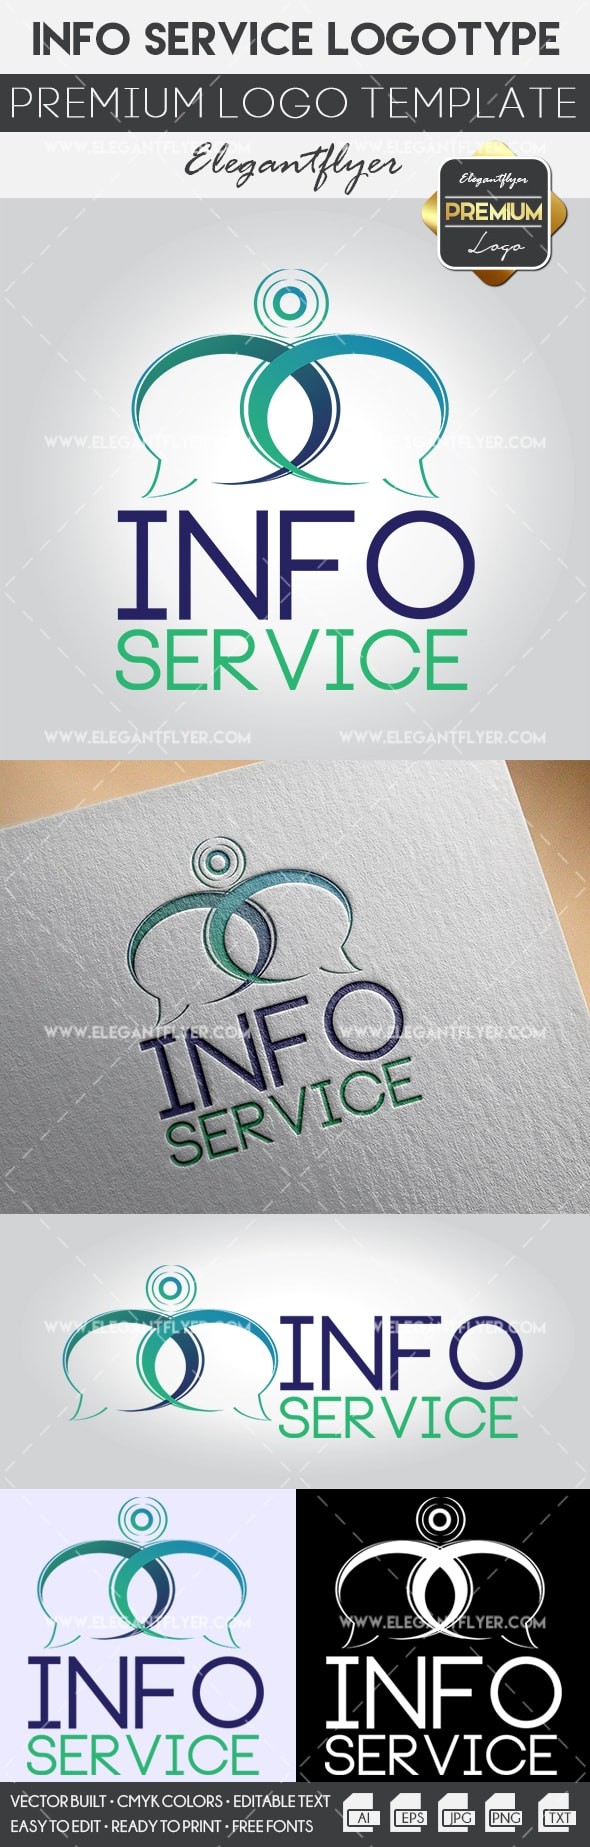 Service d'information by ElegantFlyer